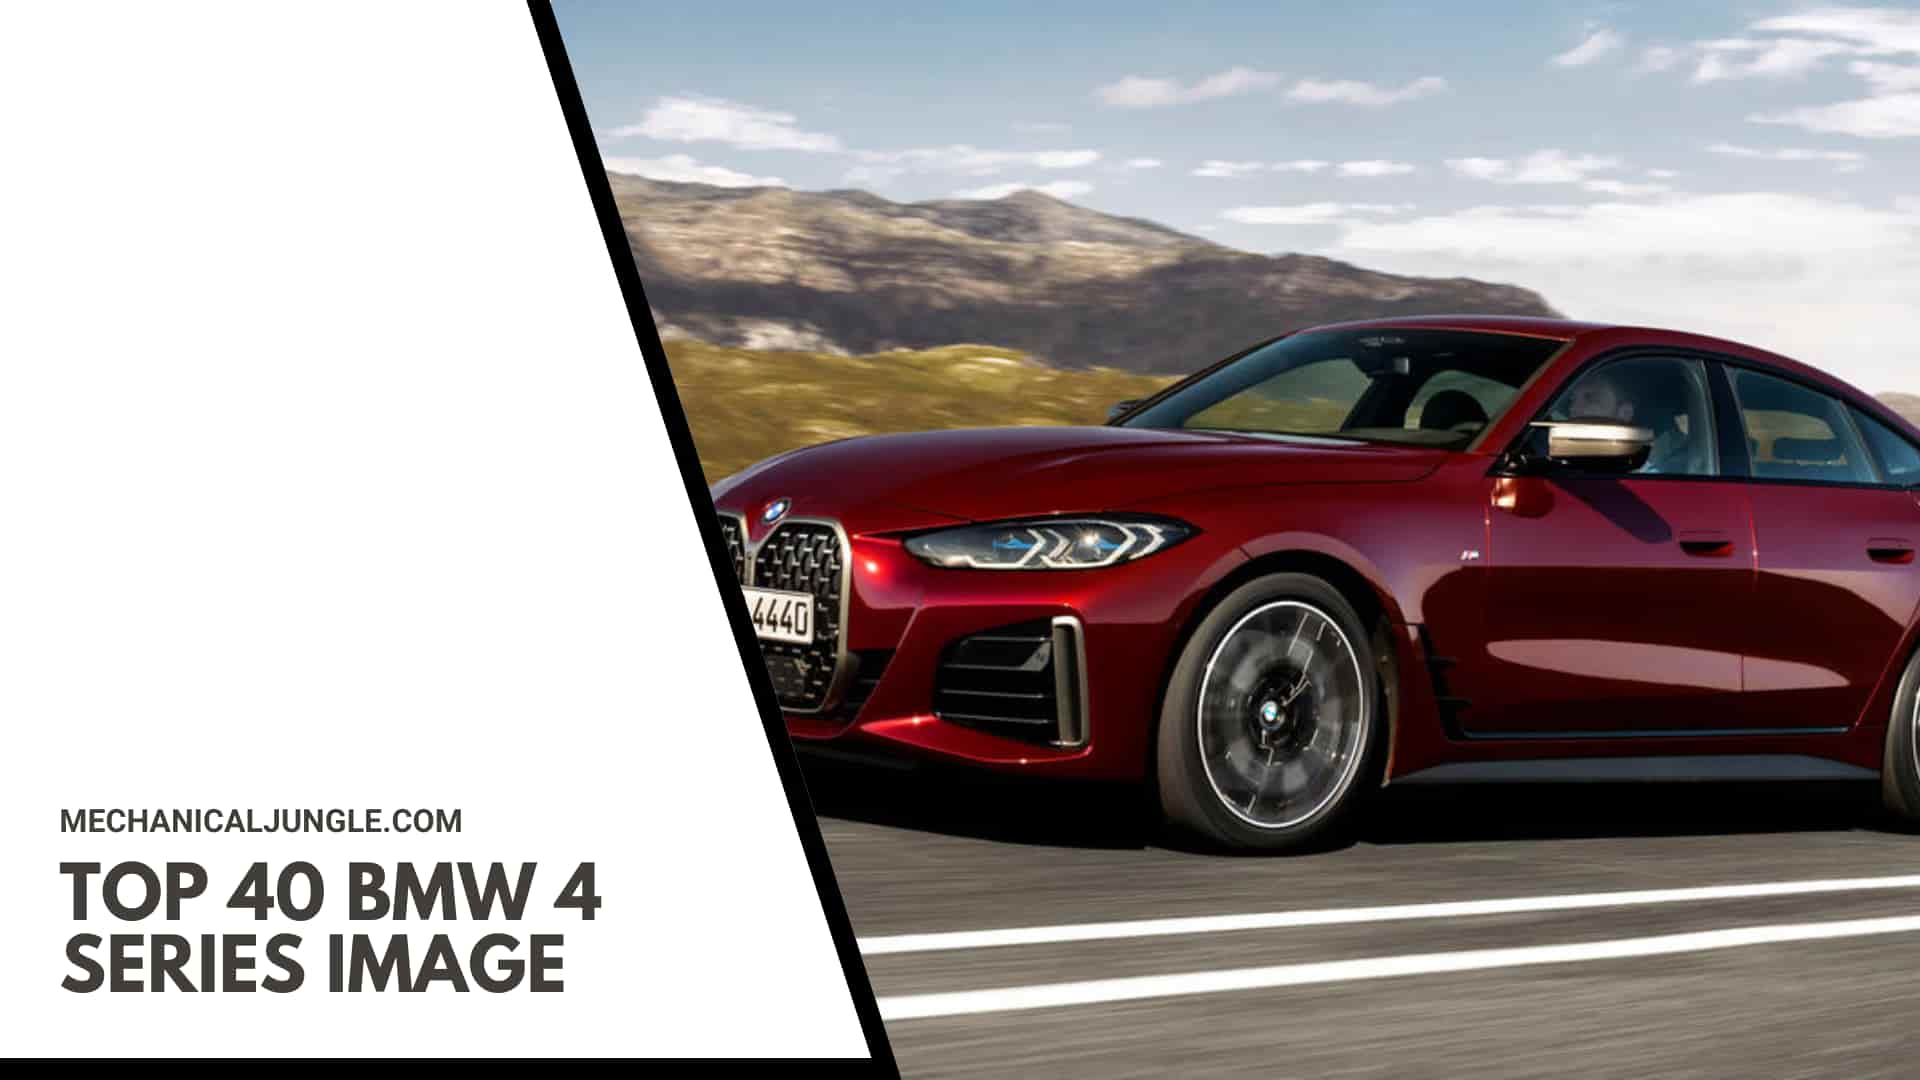 Top 40 BMW 4 Series Image